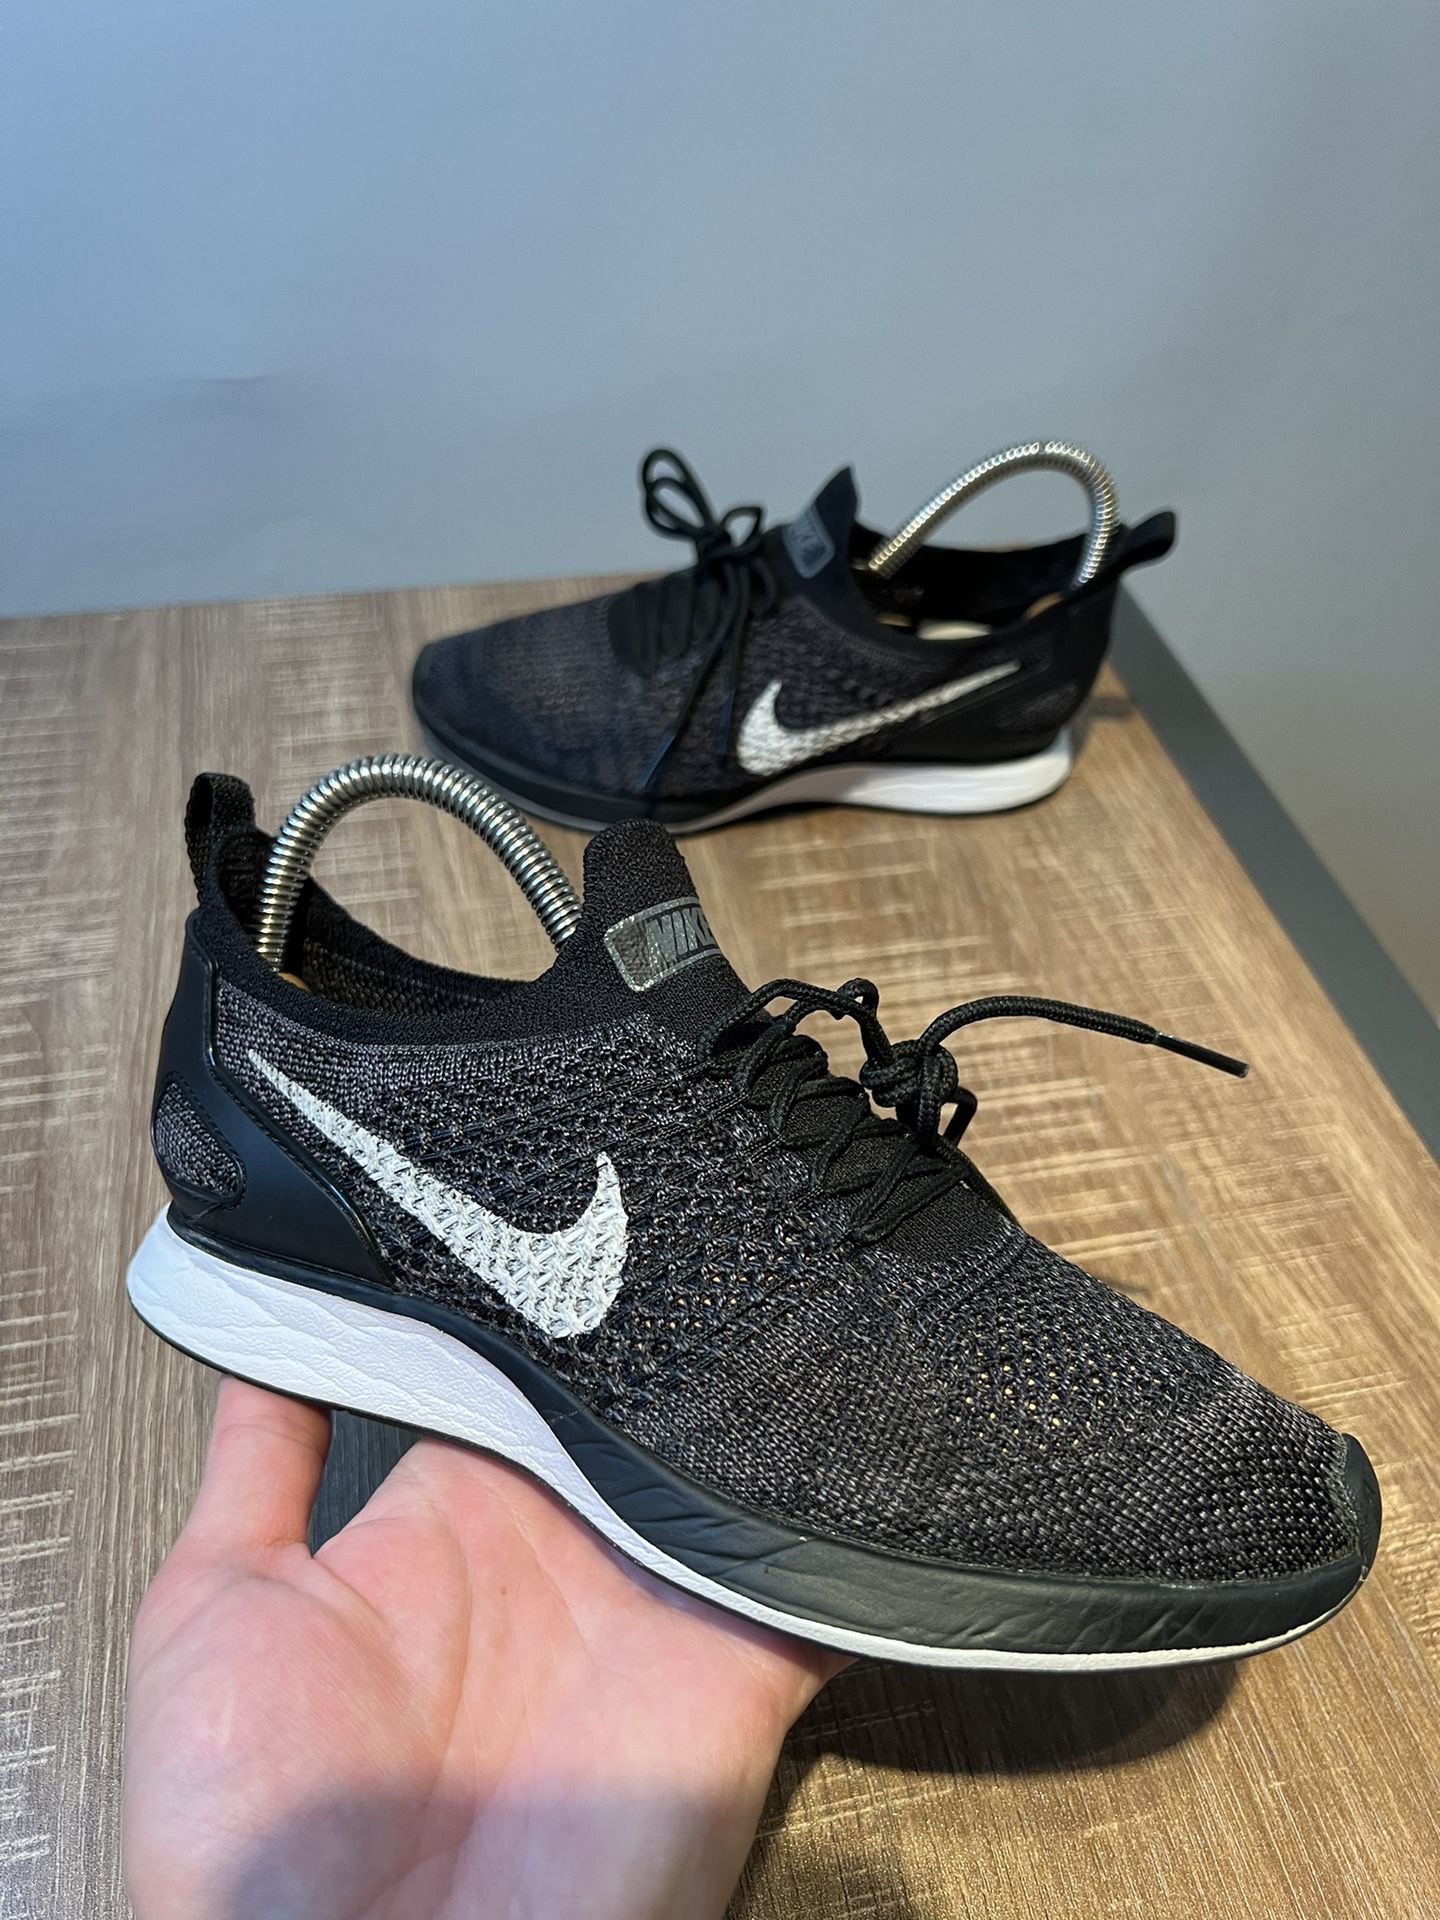 Nike Air Zoom Mariah Flyknit Racer Women's Size 6.5 Running Shoes Black